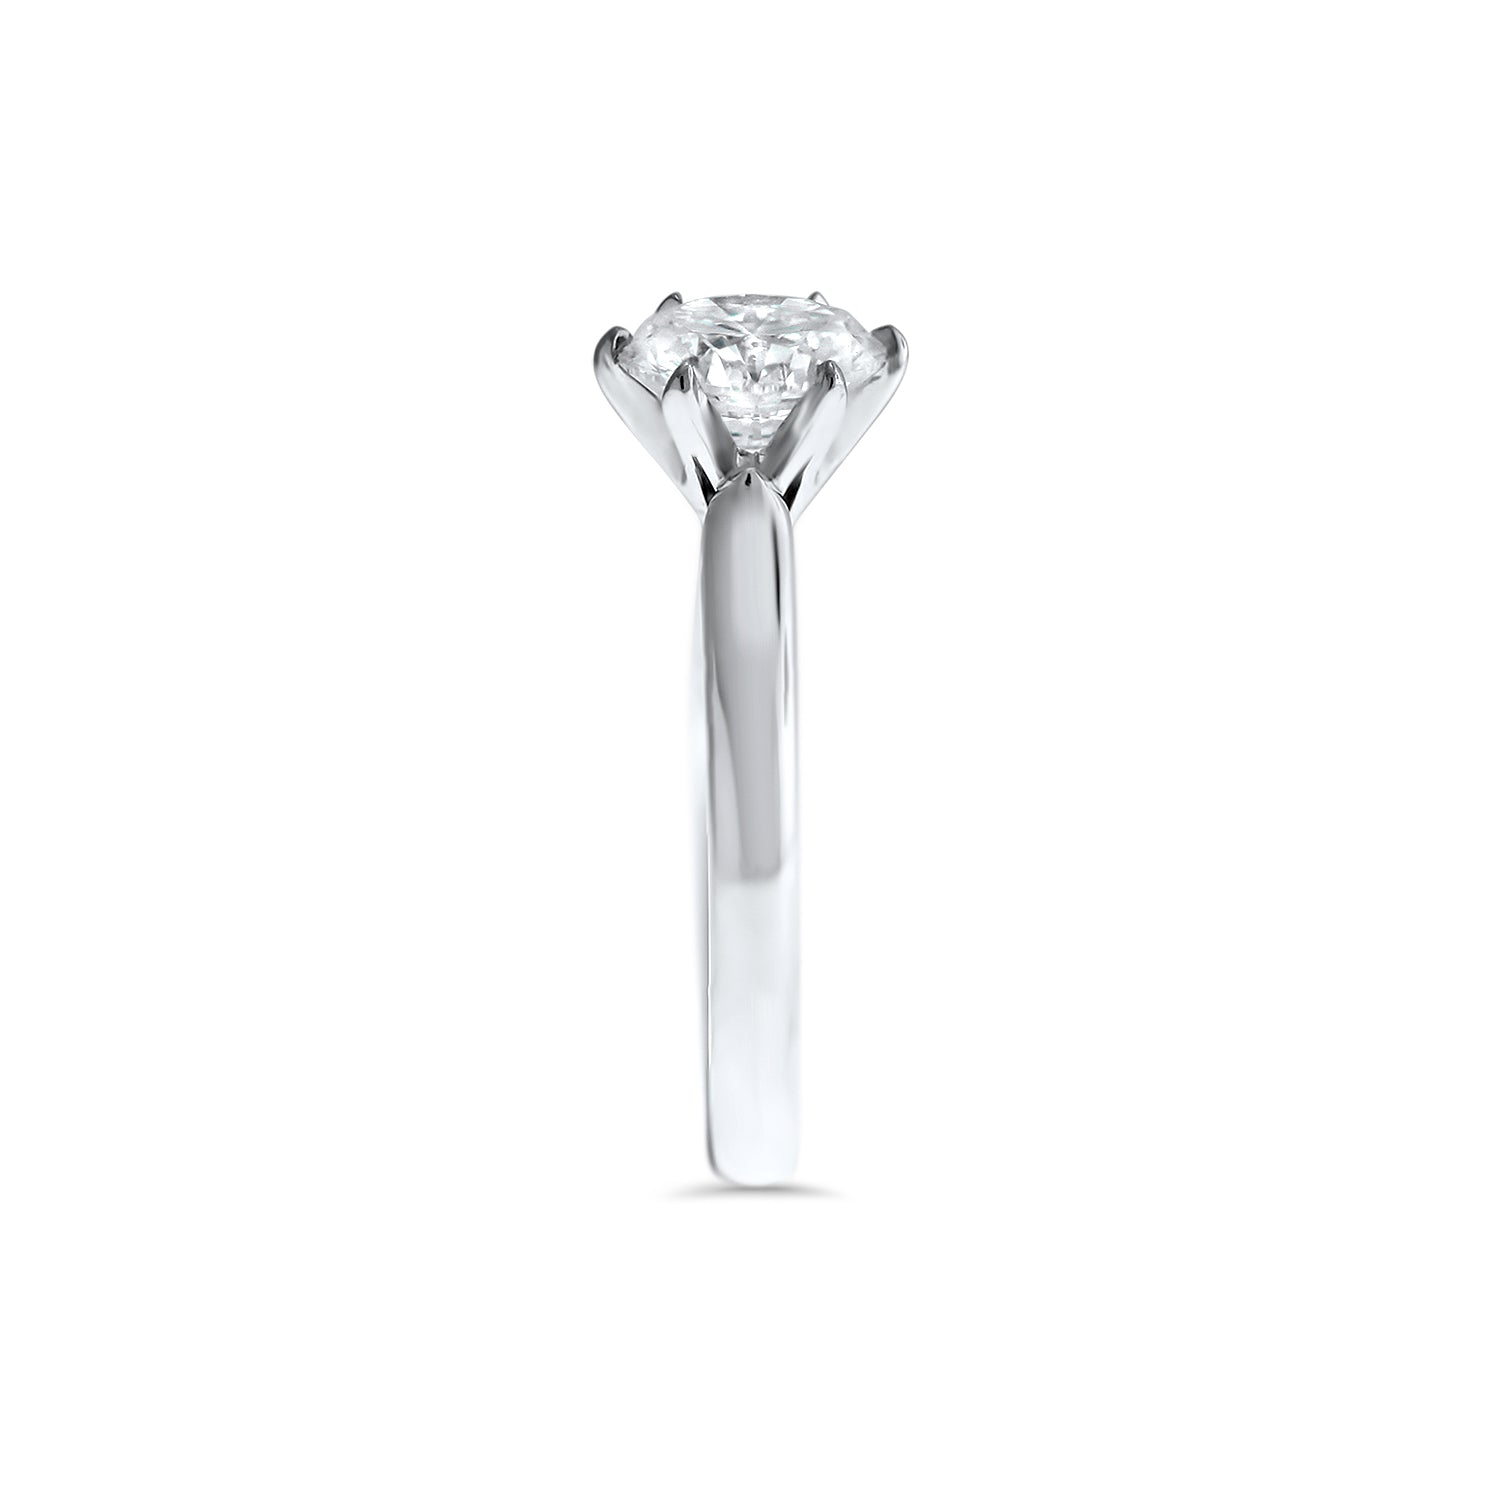 Round Brilliant Cut Solitaire Diamond Engagement Ring